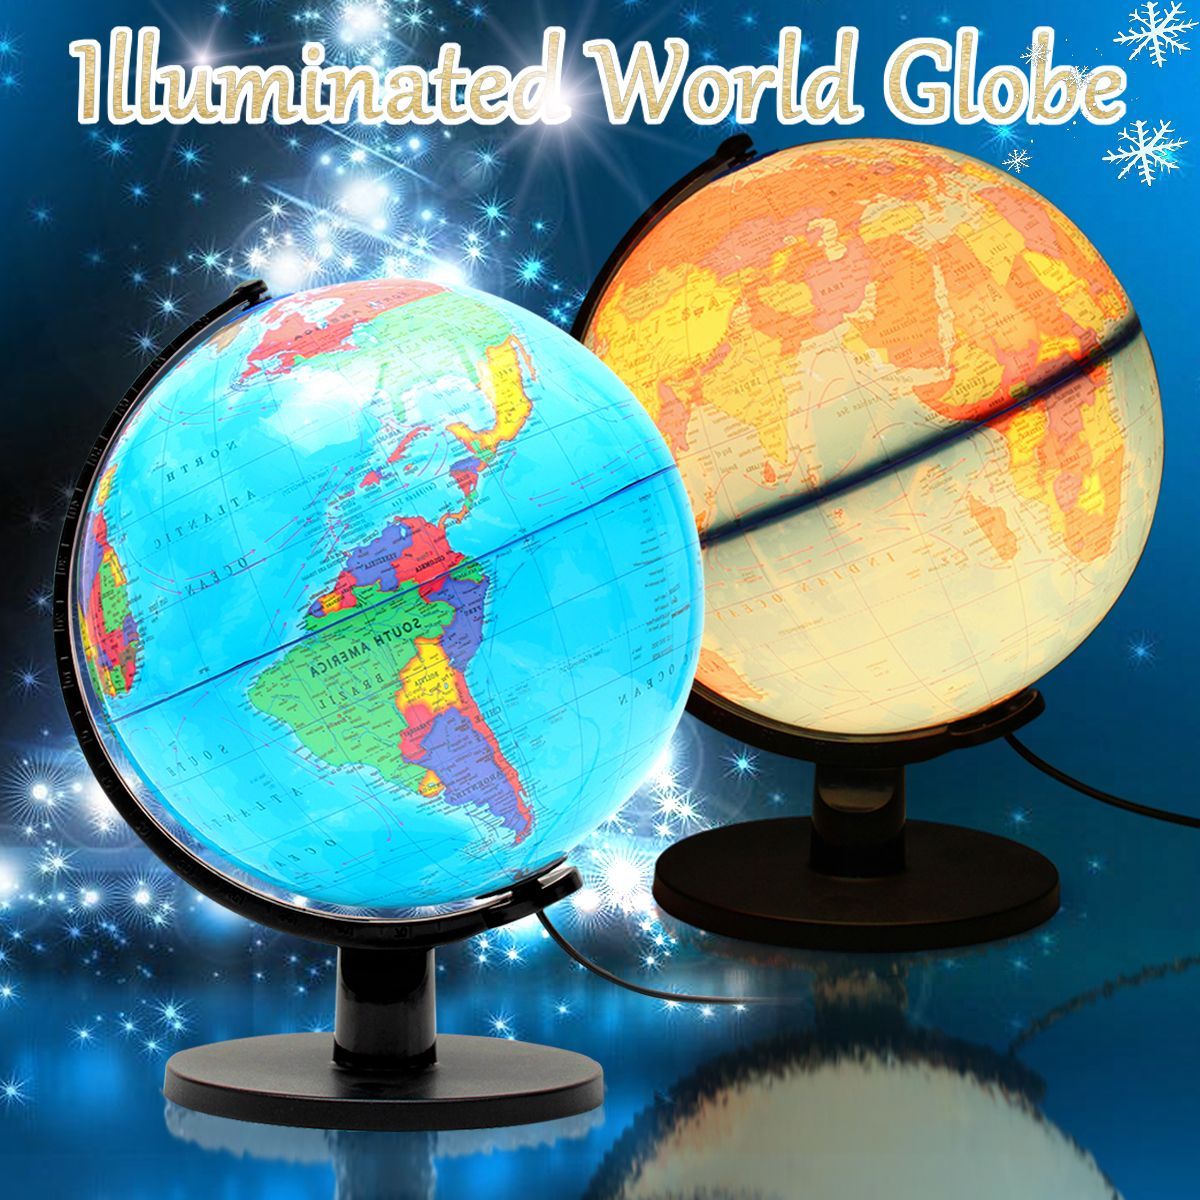 25cm-110V-World-Globe-Night-Light-Geography-LED-Lamp-Kids-Bedroom-Decor-Gift-US-Plug-1390550